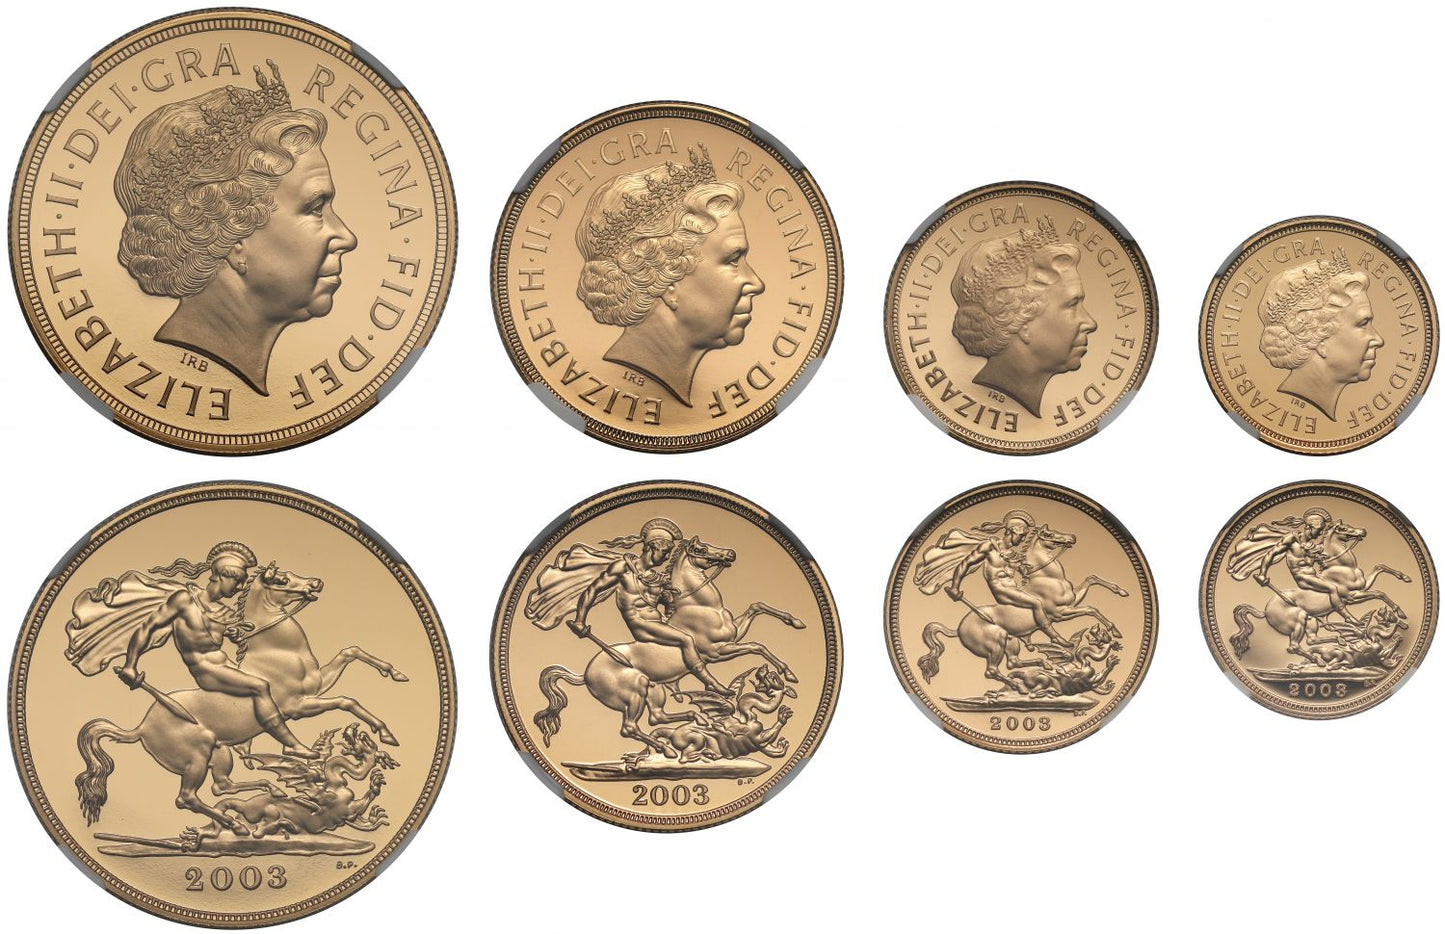 Elizabeth II 2003 4-coin gold proof Set PF70 ULTRA CAMEO